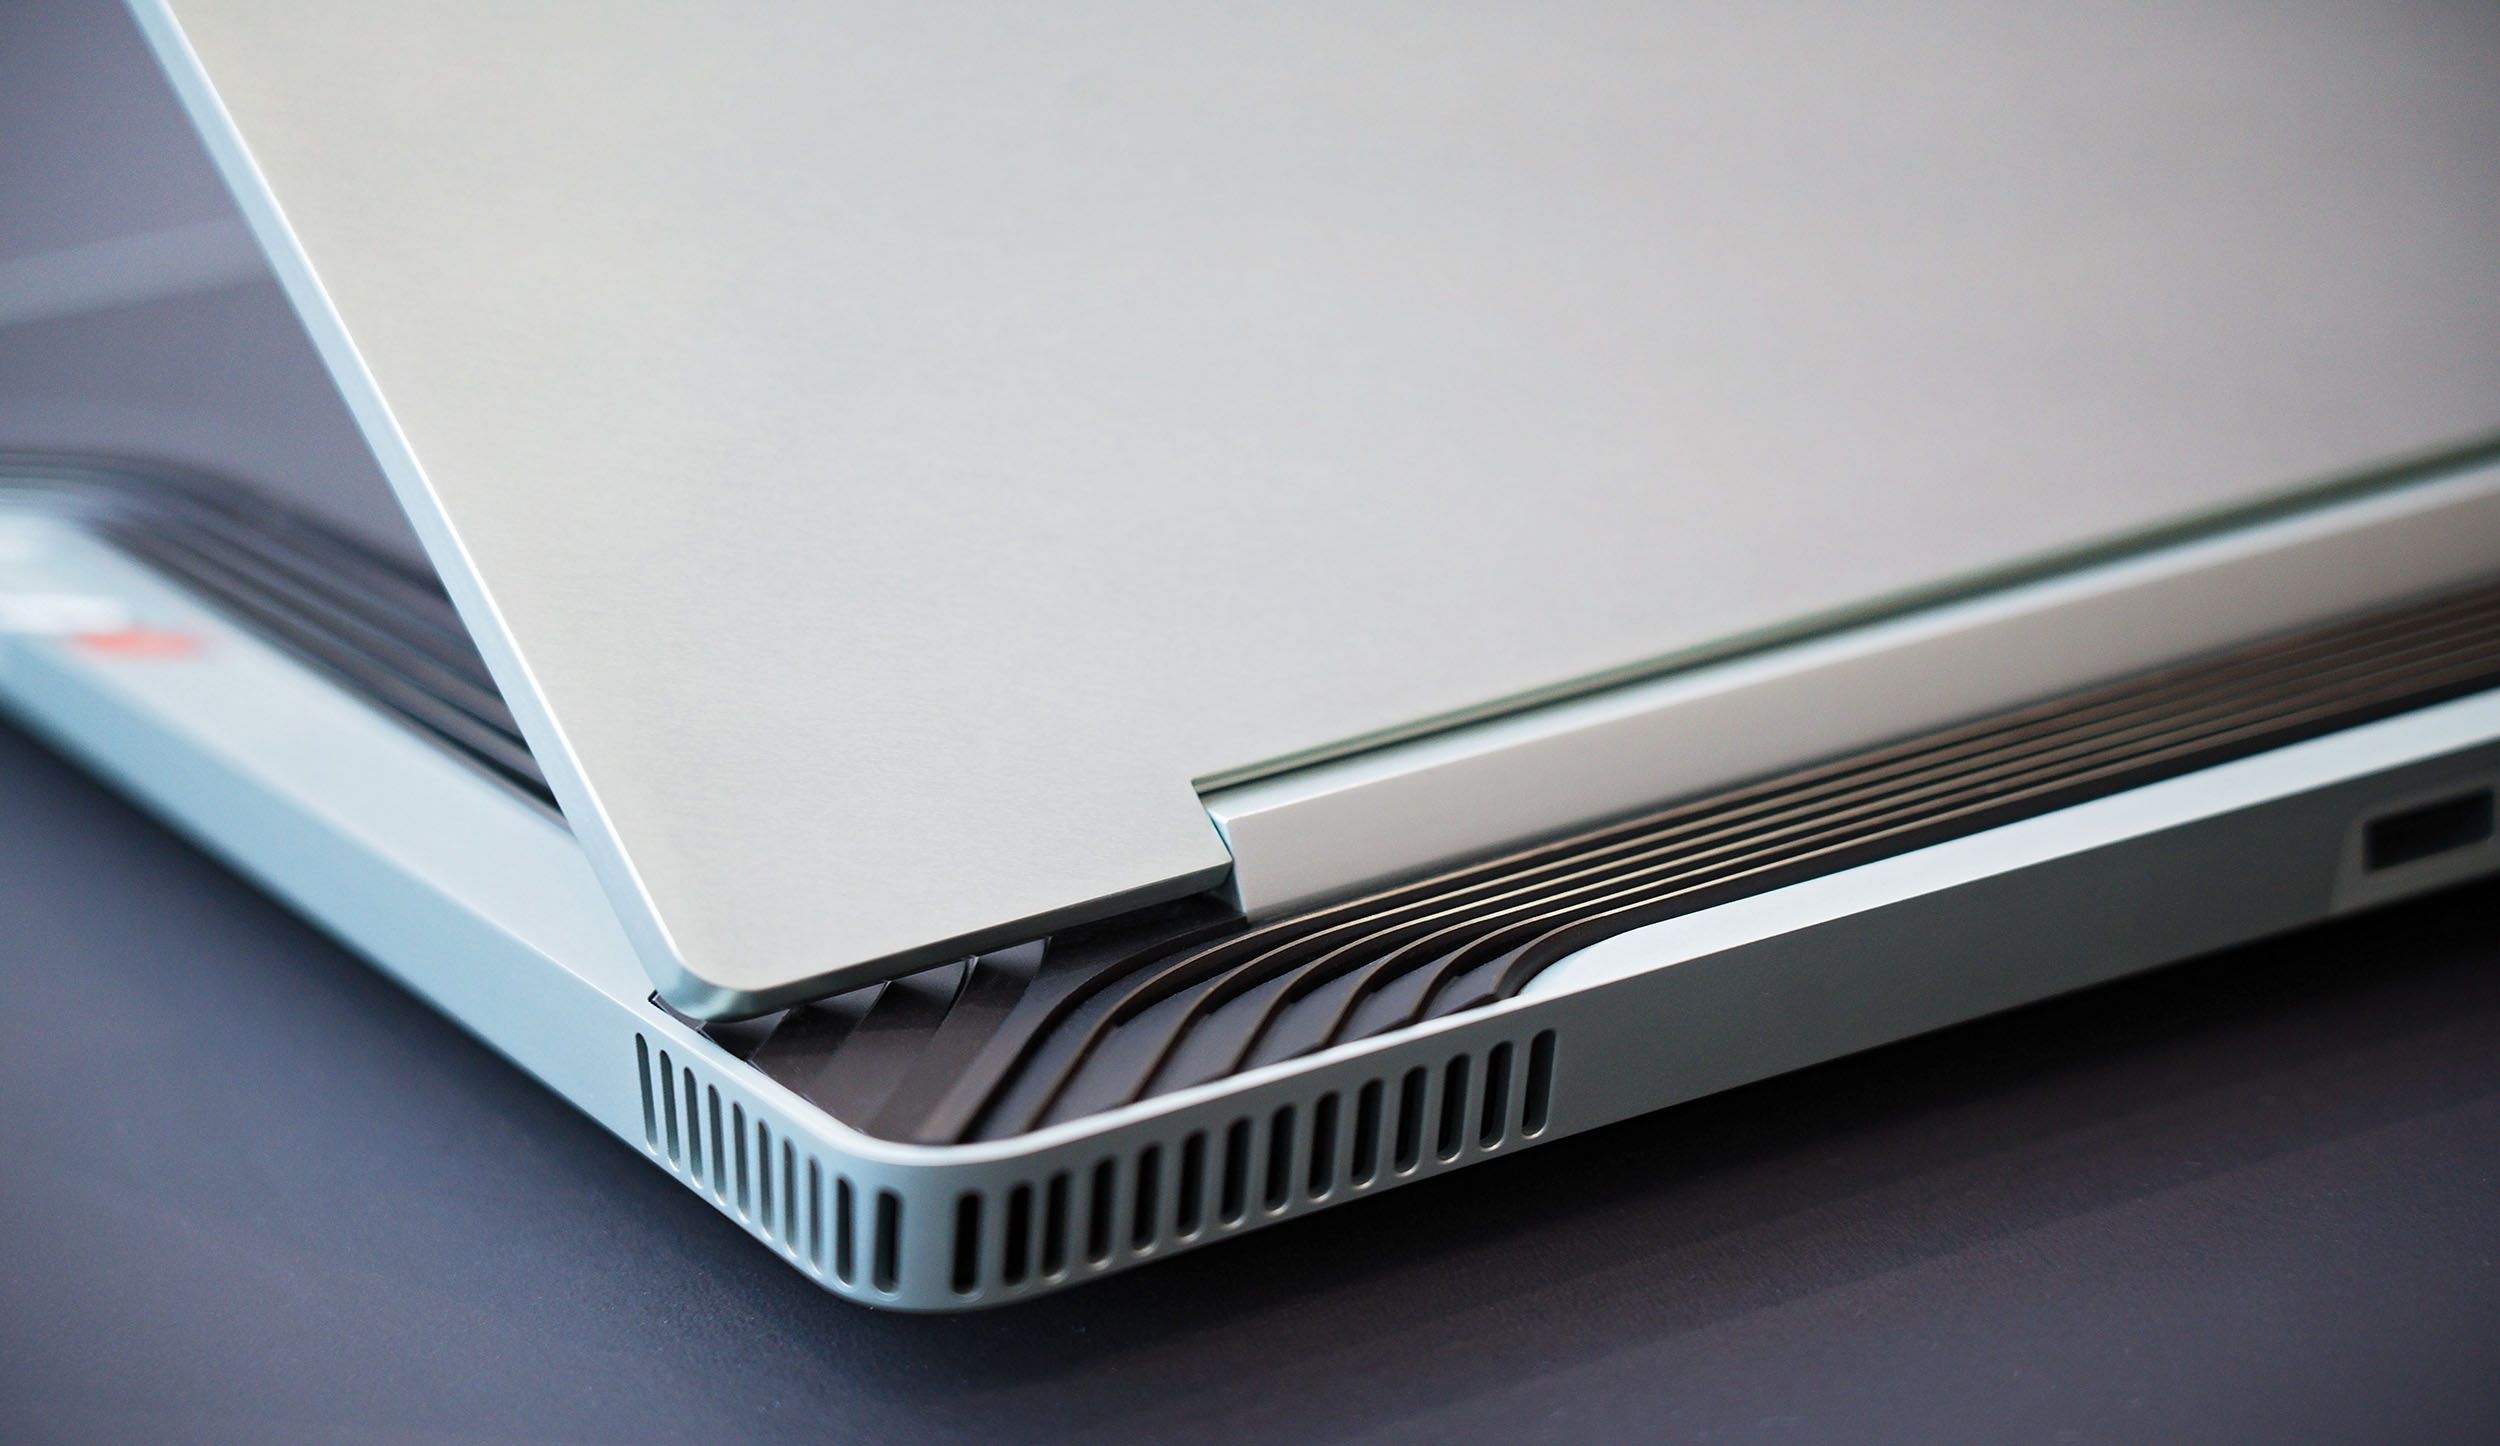 Detail view of laptop ventilation gills.